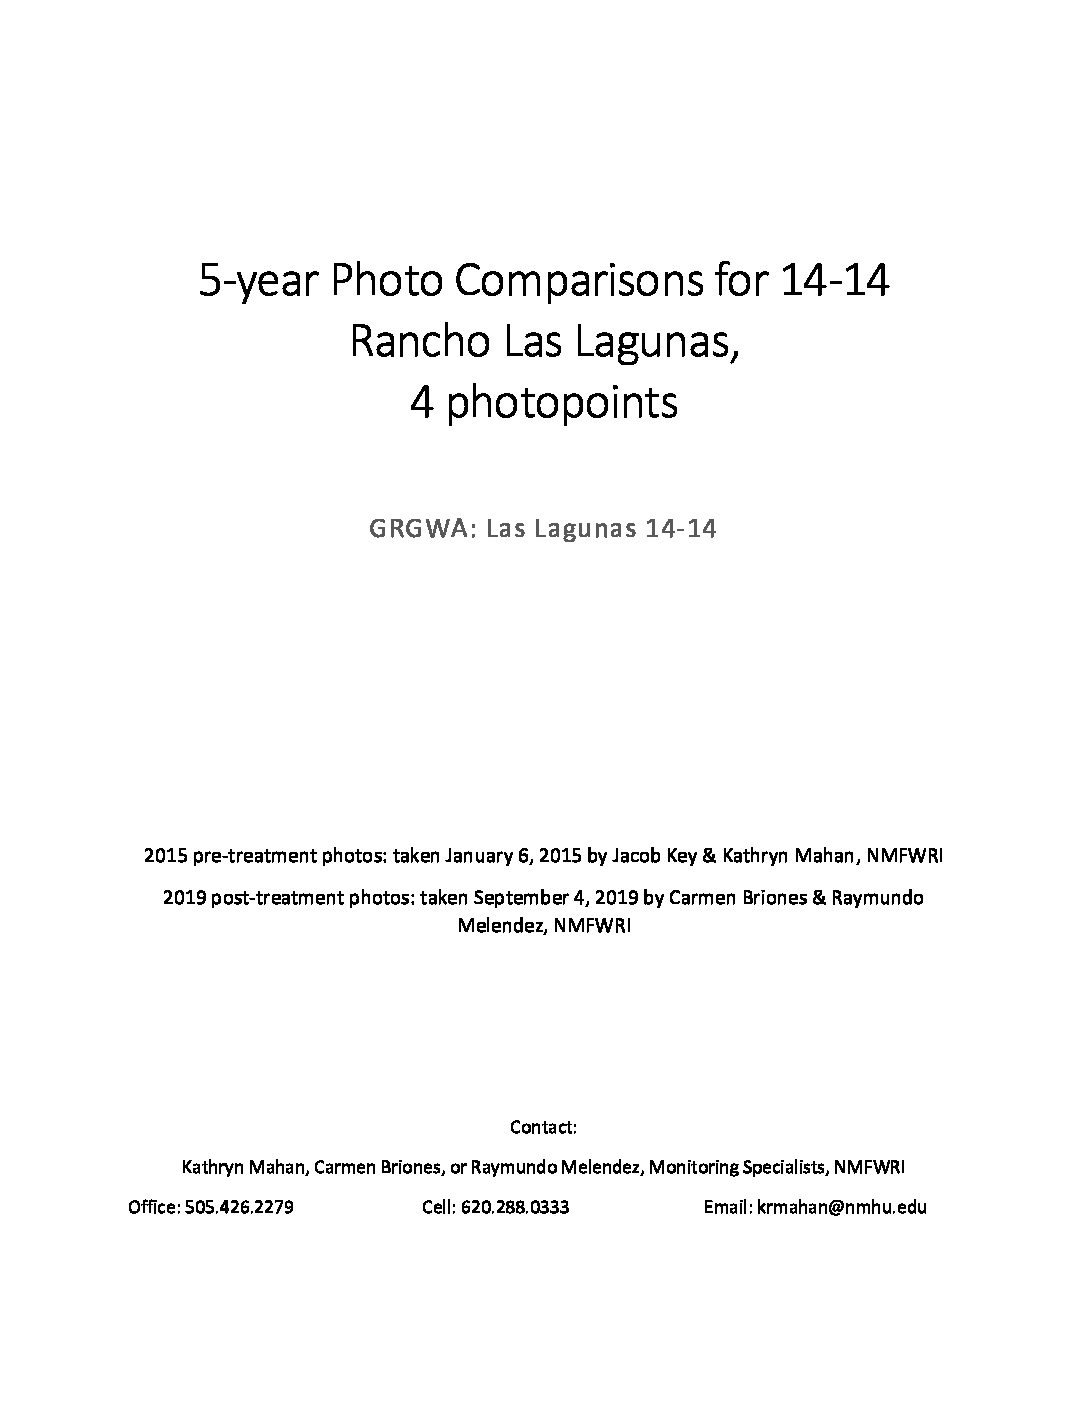 Ranch Las Lagunas 14-14 5yr Photo Comparisons